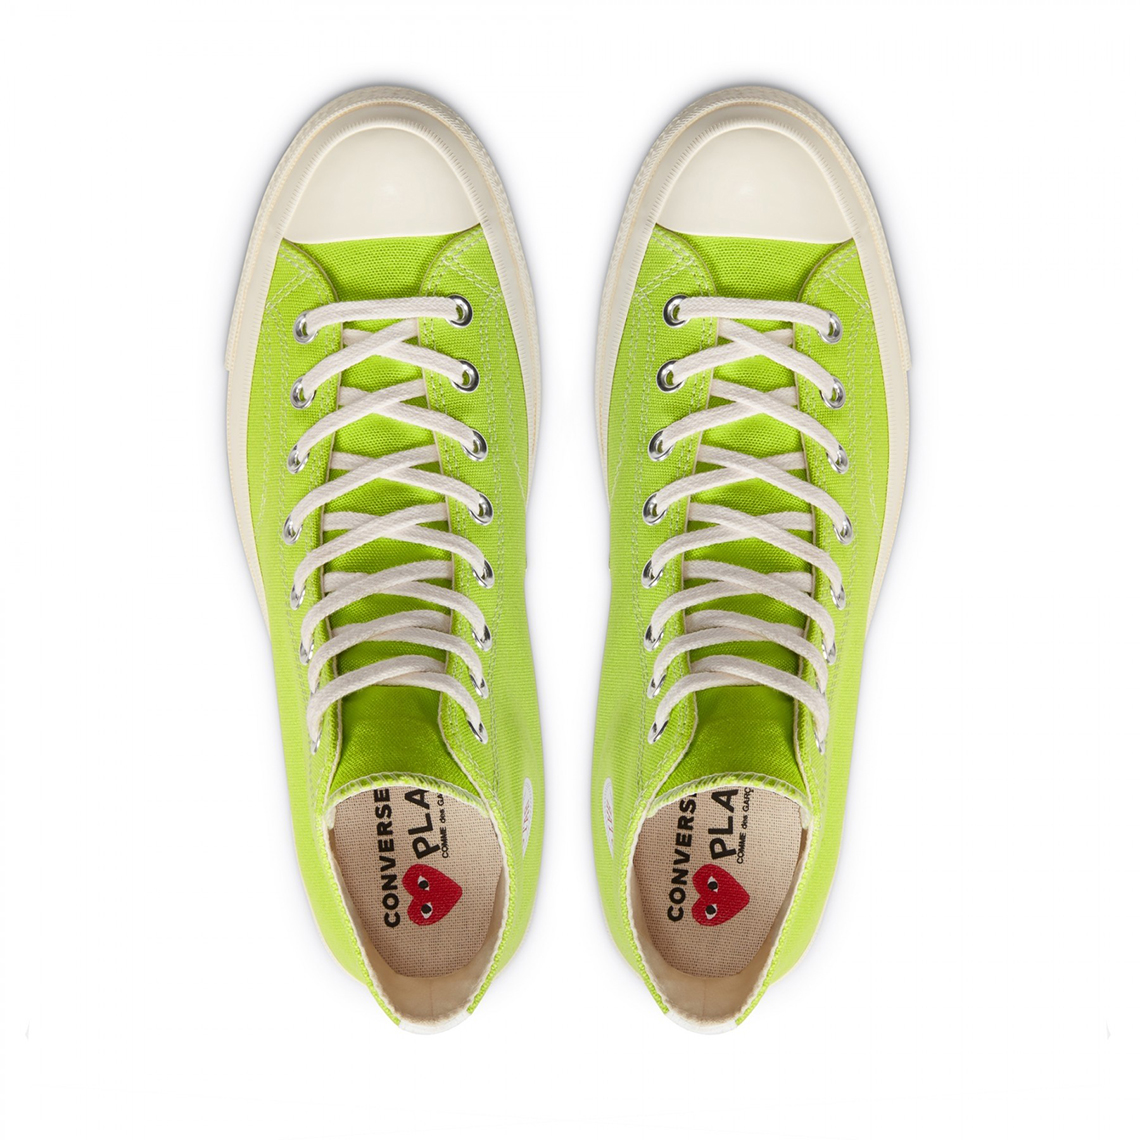 converse light green shoes